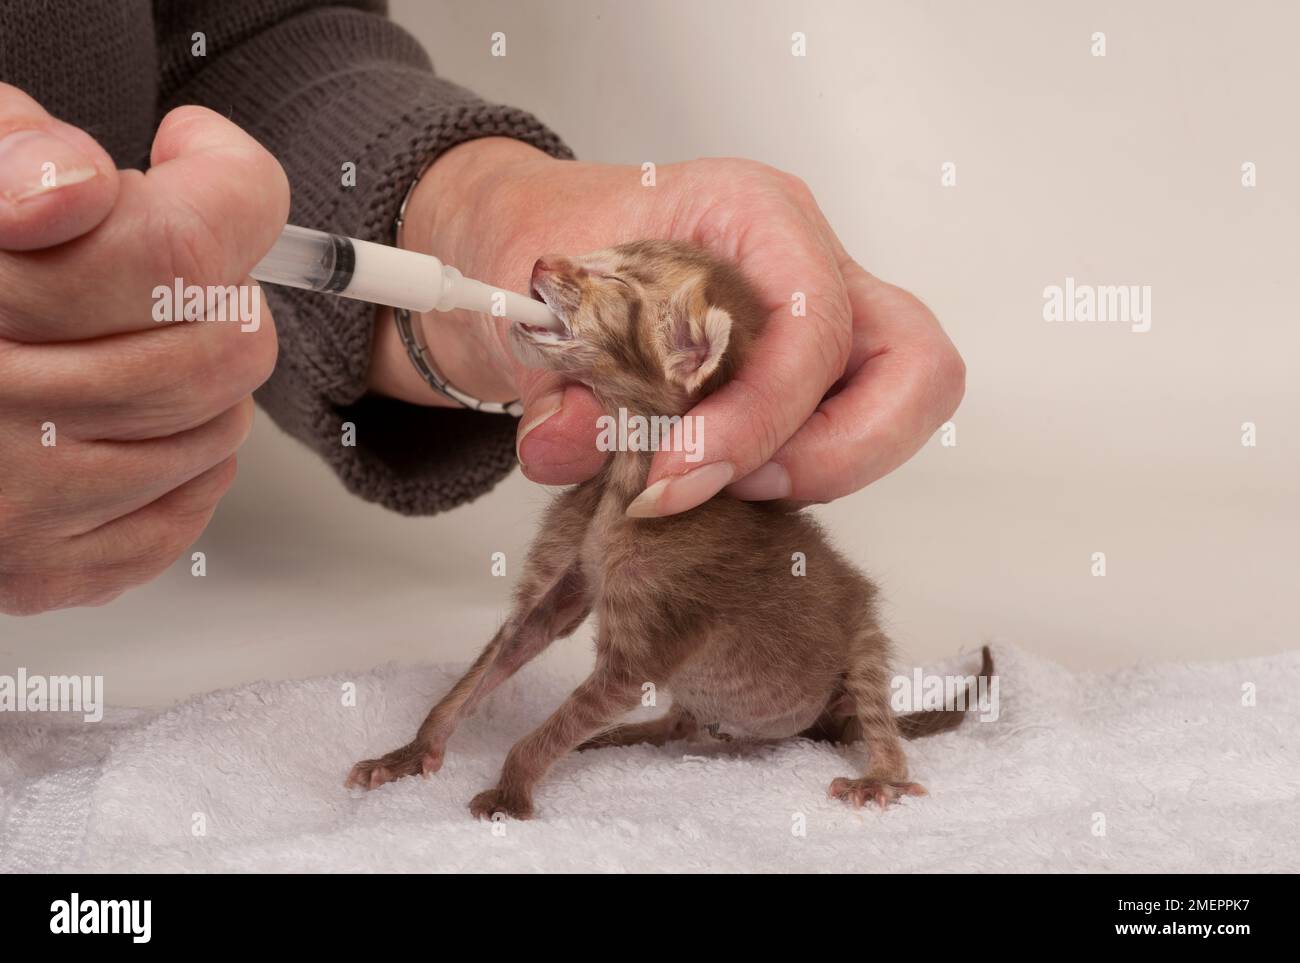 Feeding milk to a kitten using a syringe Stock Photo